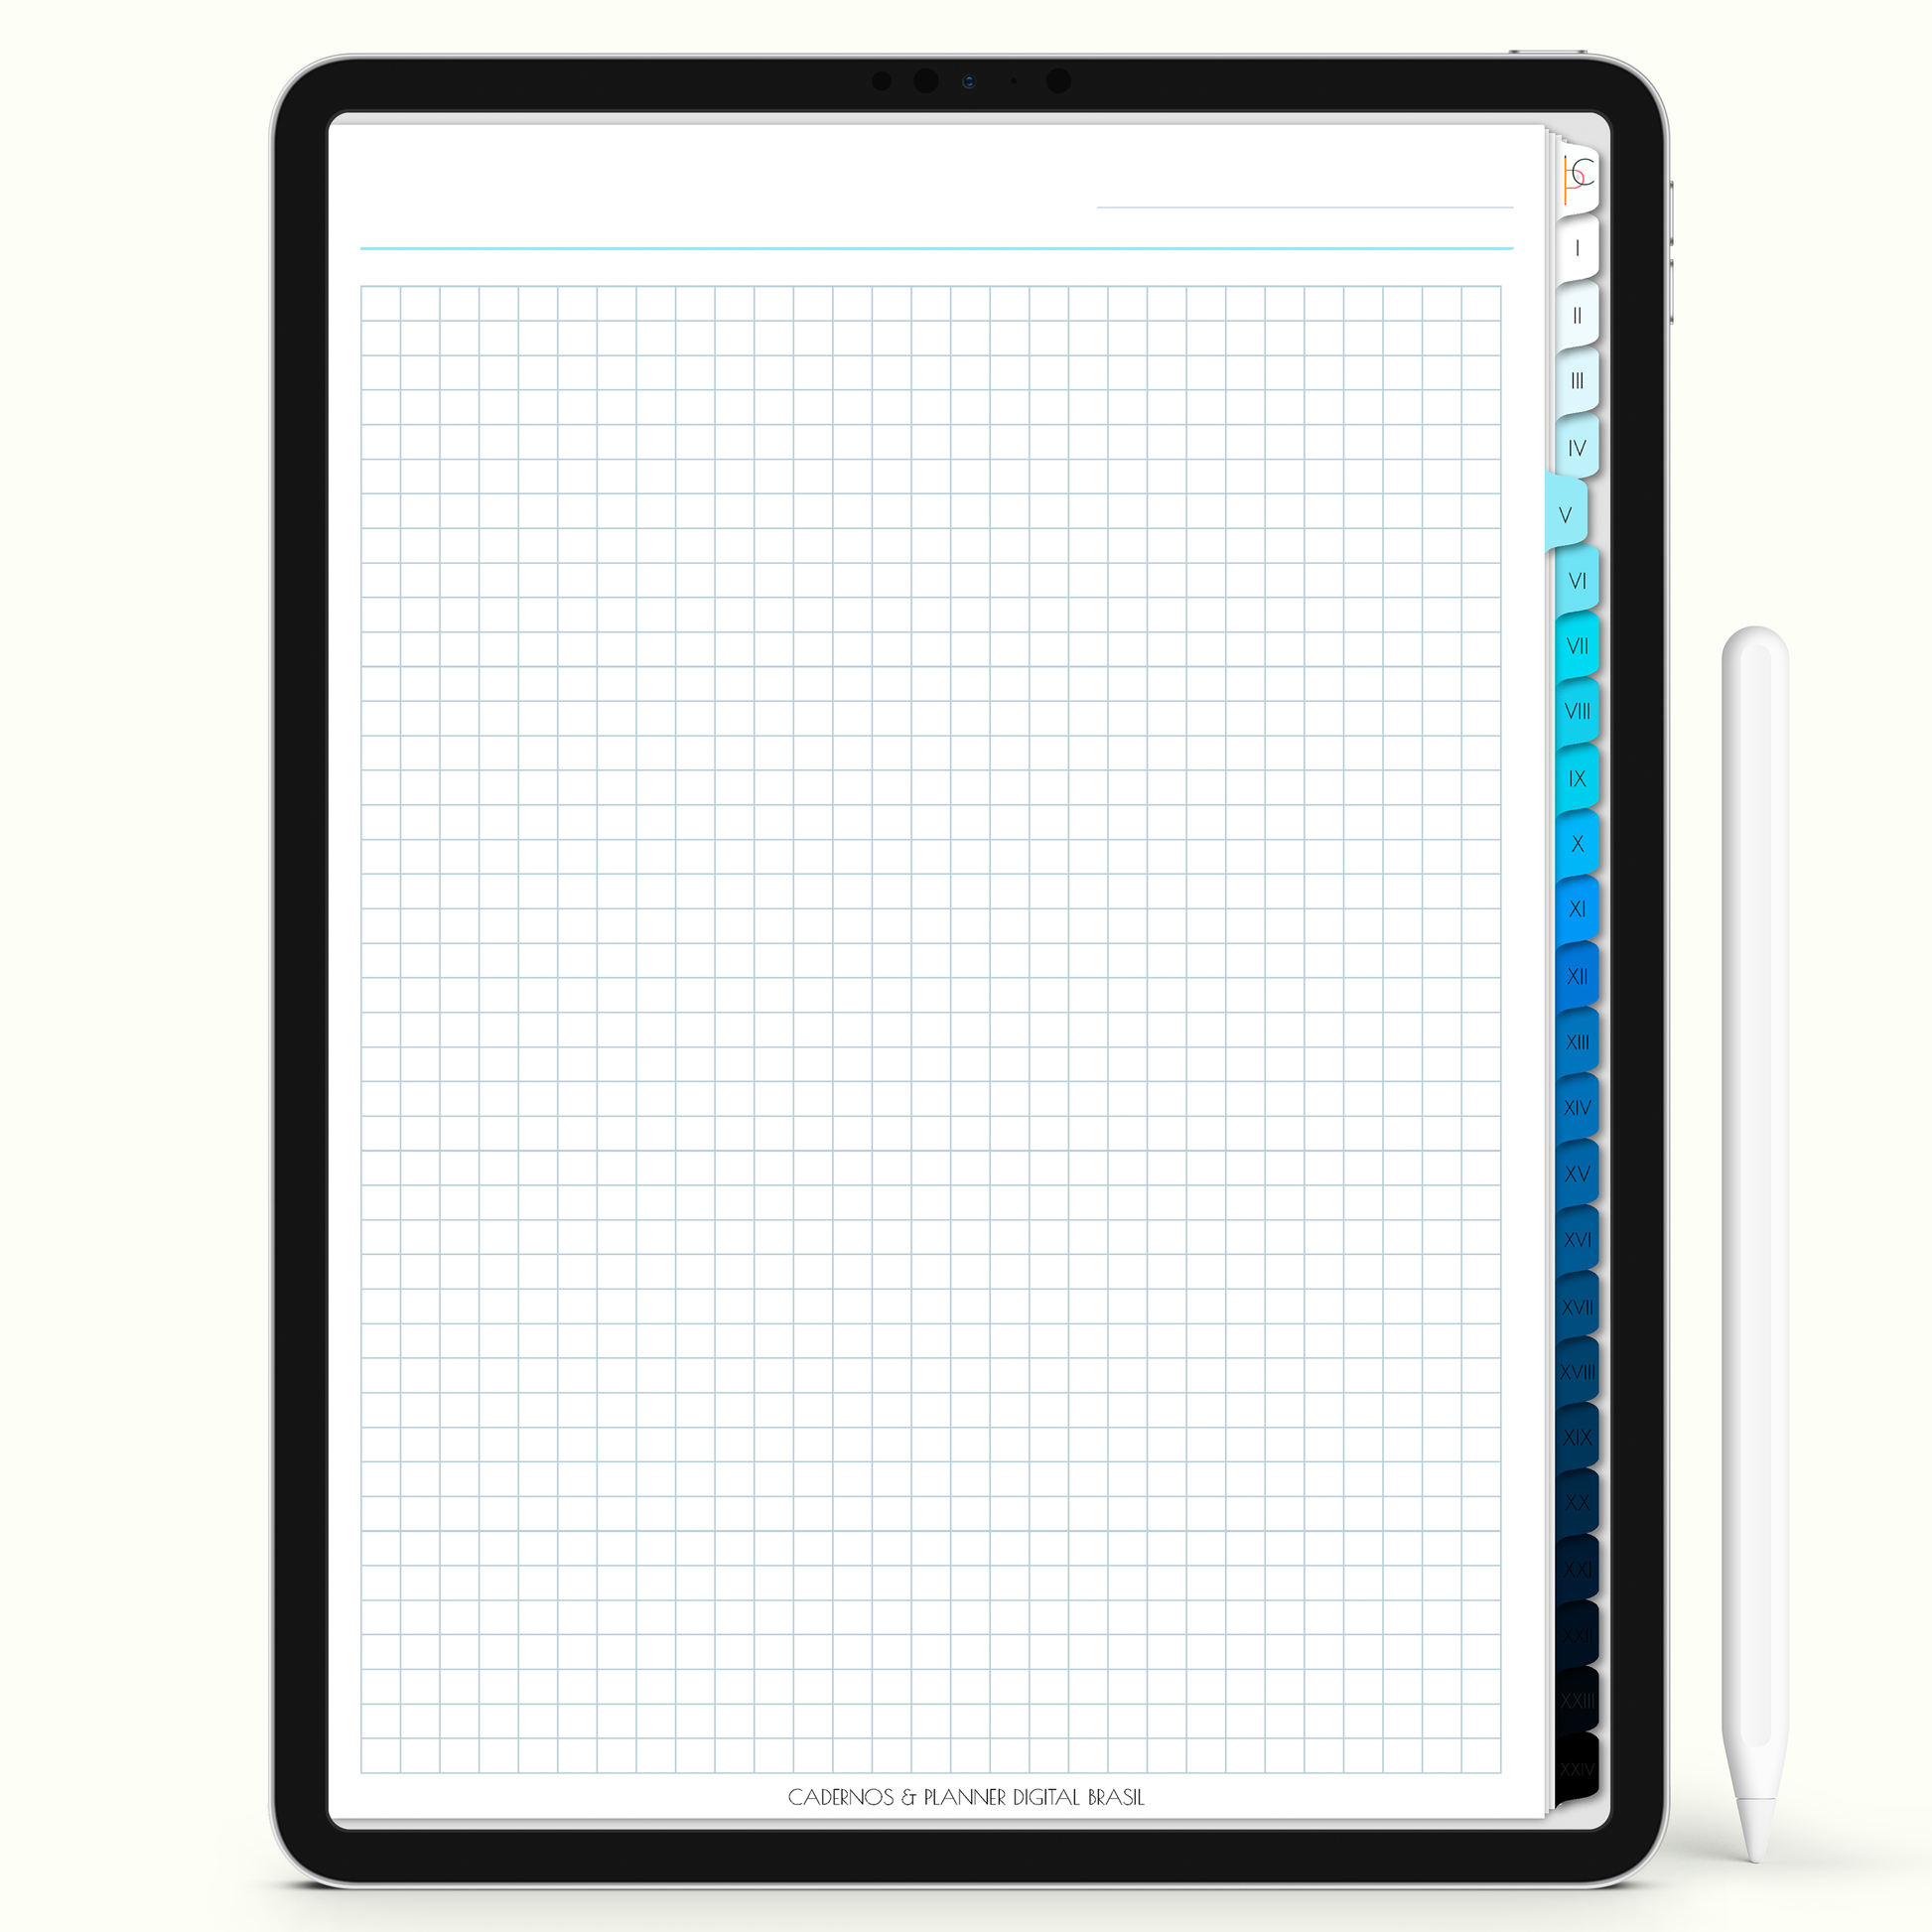 Caderno Digital 24 Matérias - página quadriculada, caderno digital para iPad e Tablet Android. Cadernos & Planner Digital Brasil